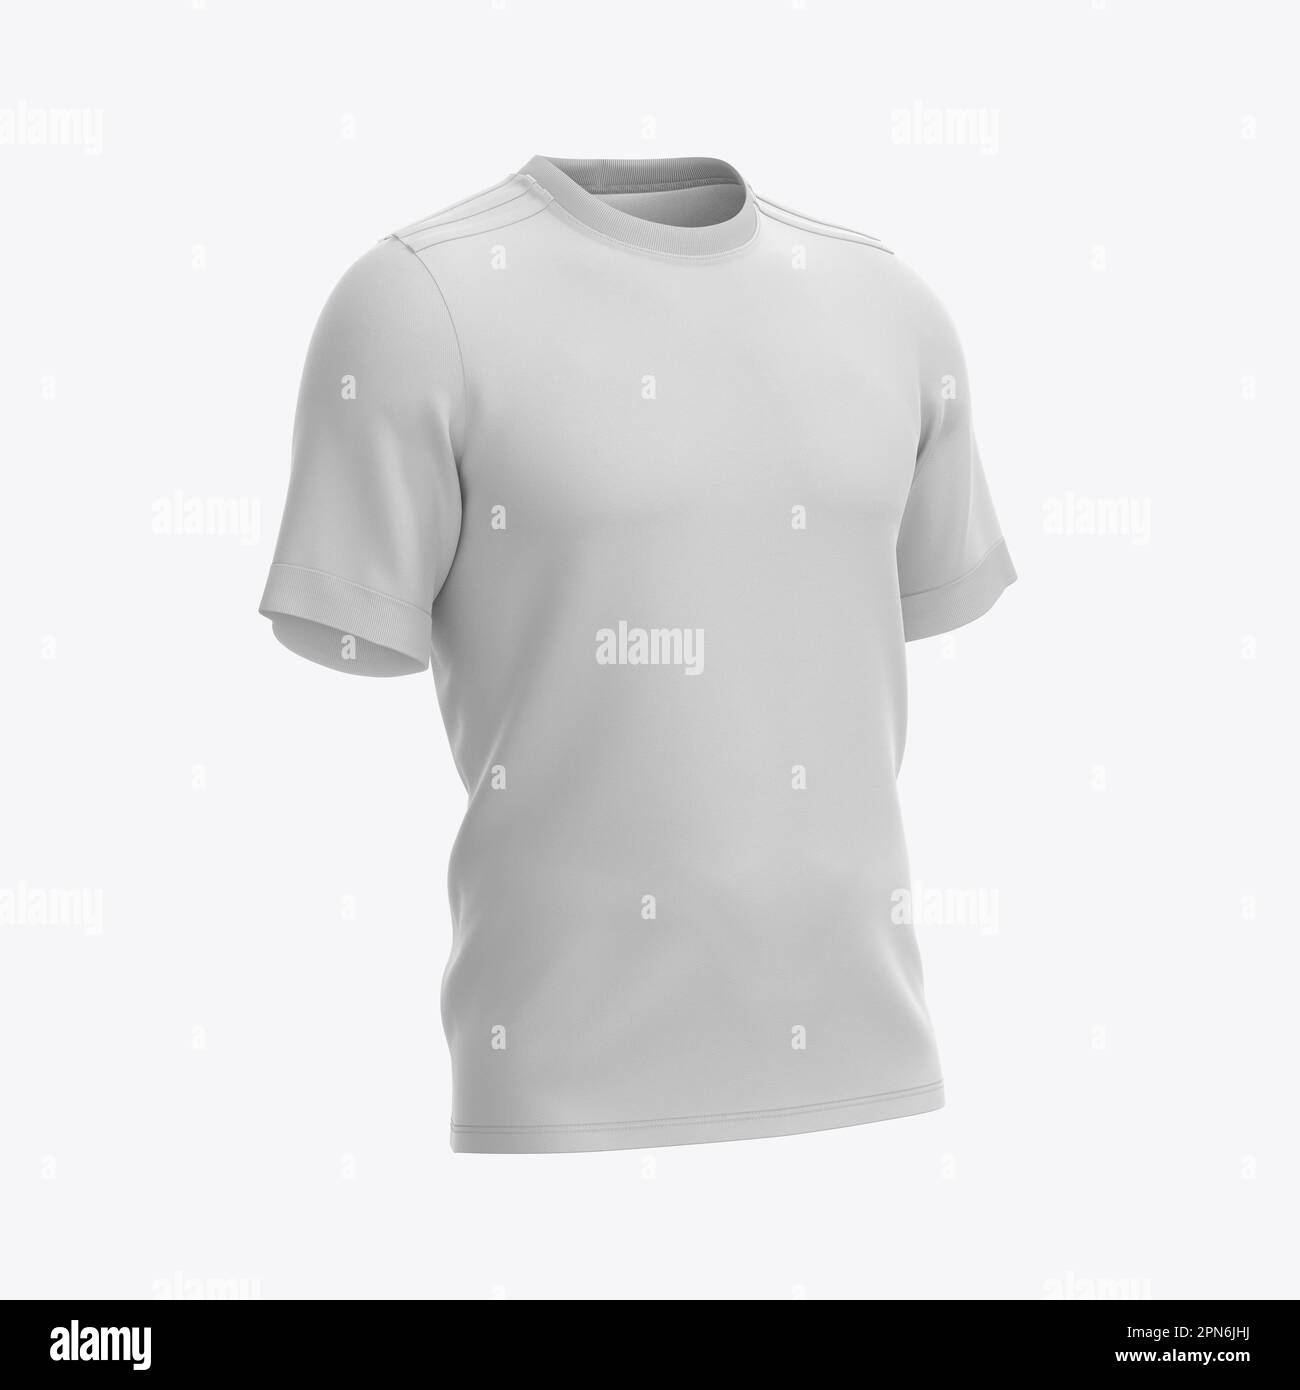 Men s Sports T-shirt Mockup. 3D render Stock Photo - Alamy